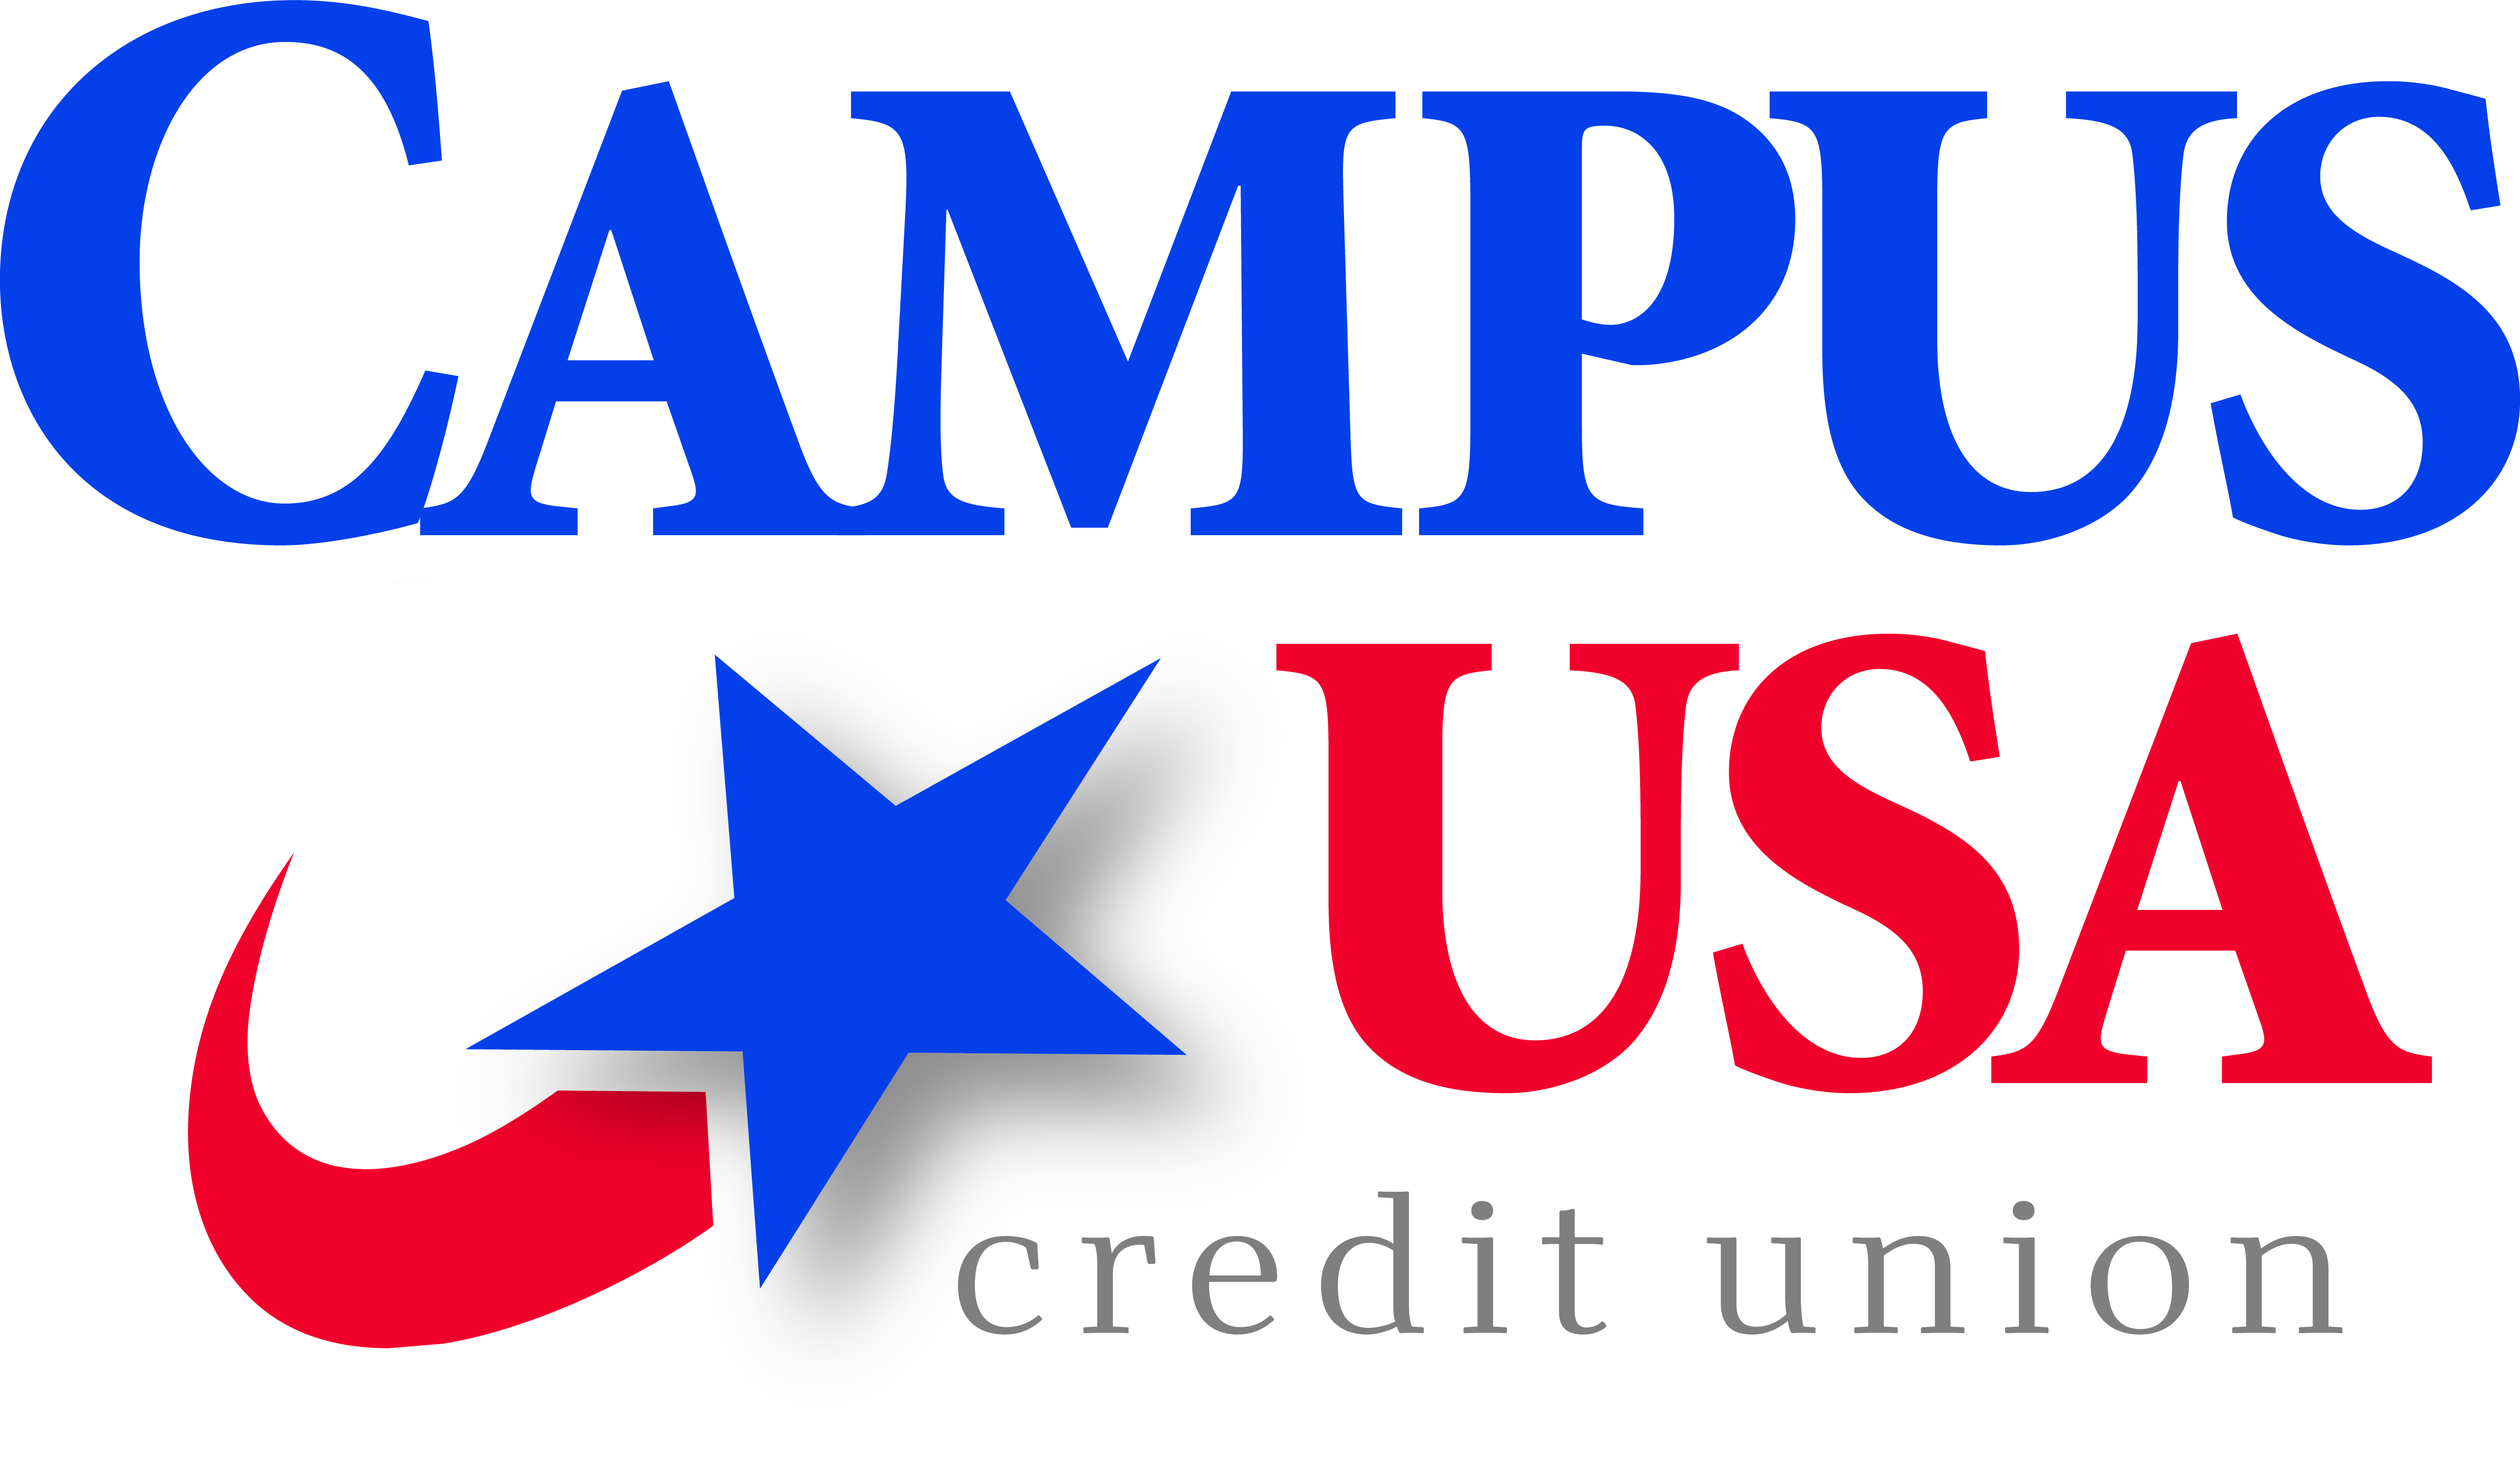 Campus USA Credit Union